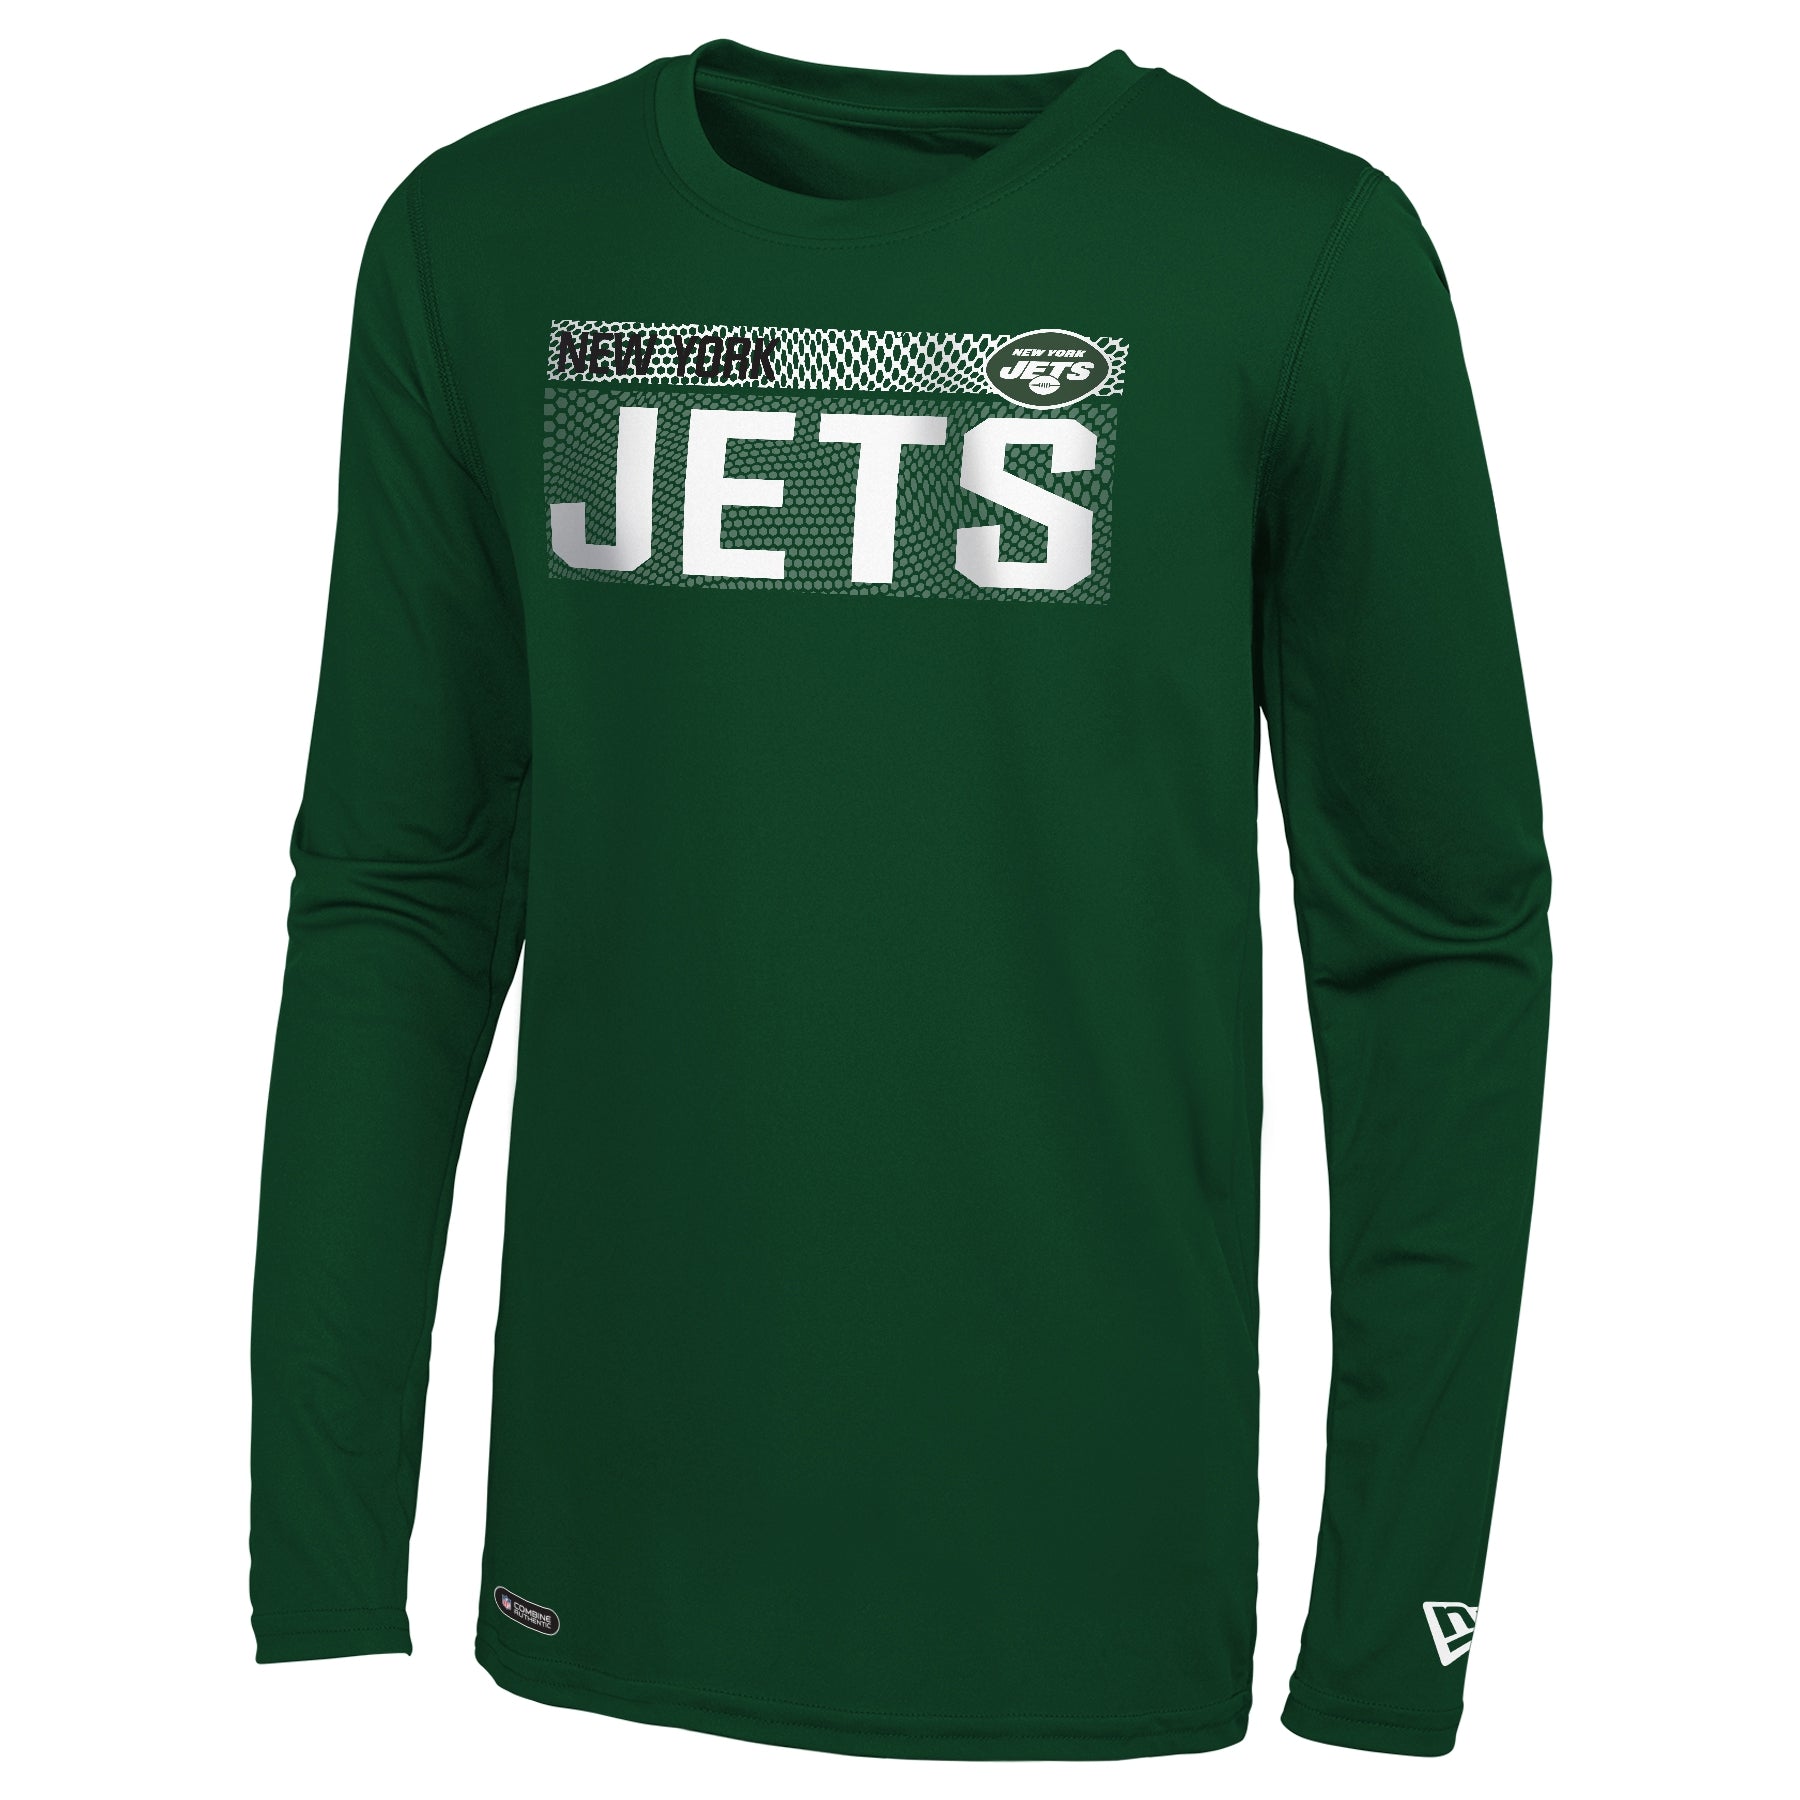 new york jets long sleeve shirt